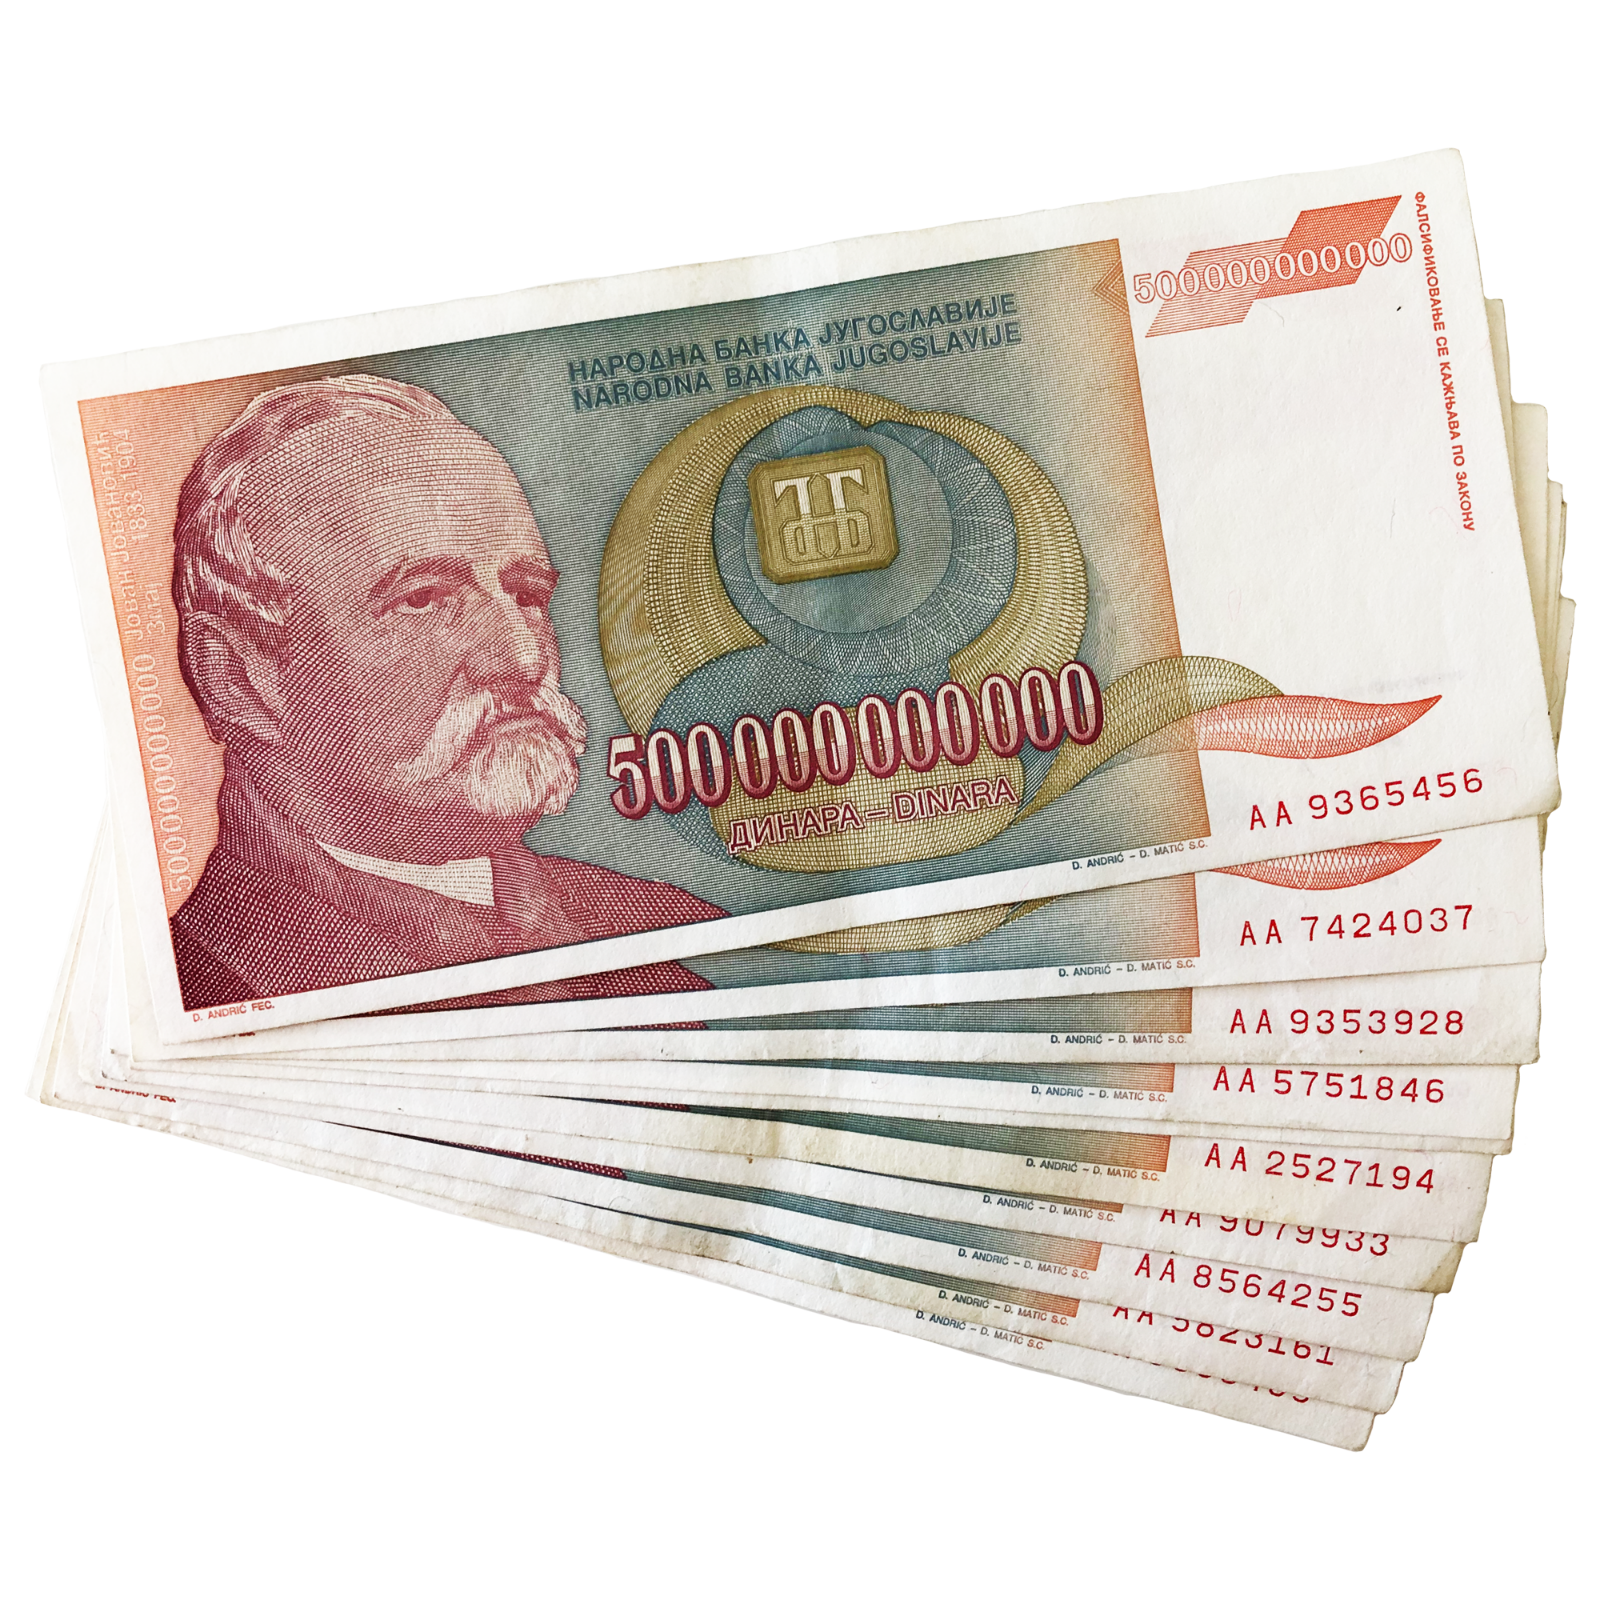 Yugoslavia 500 Billion Dinara Banknote Hyperinflation Currency